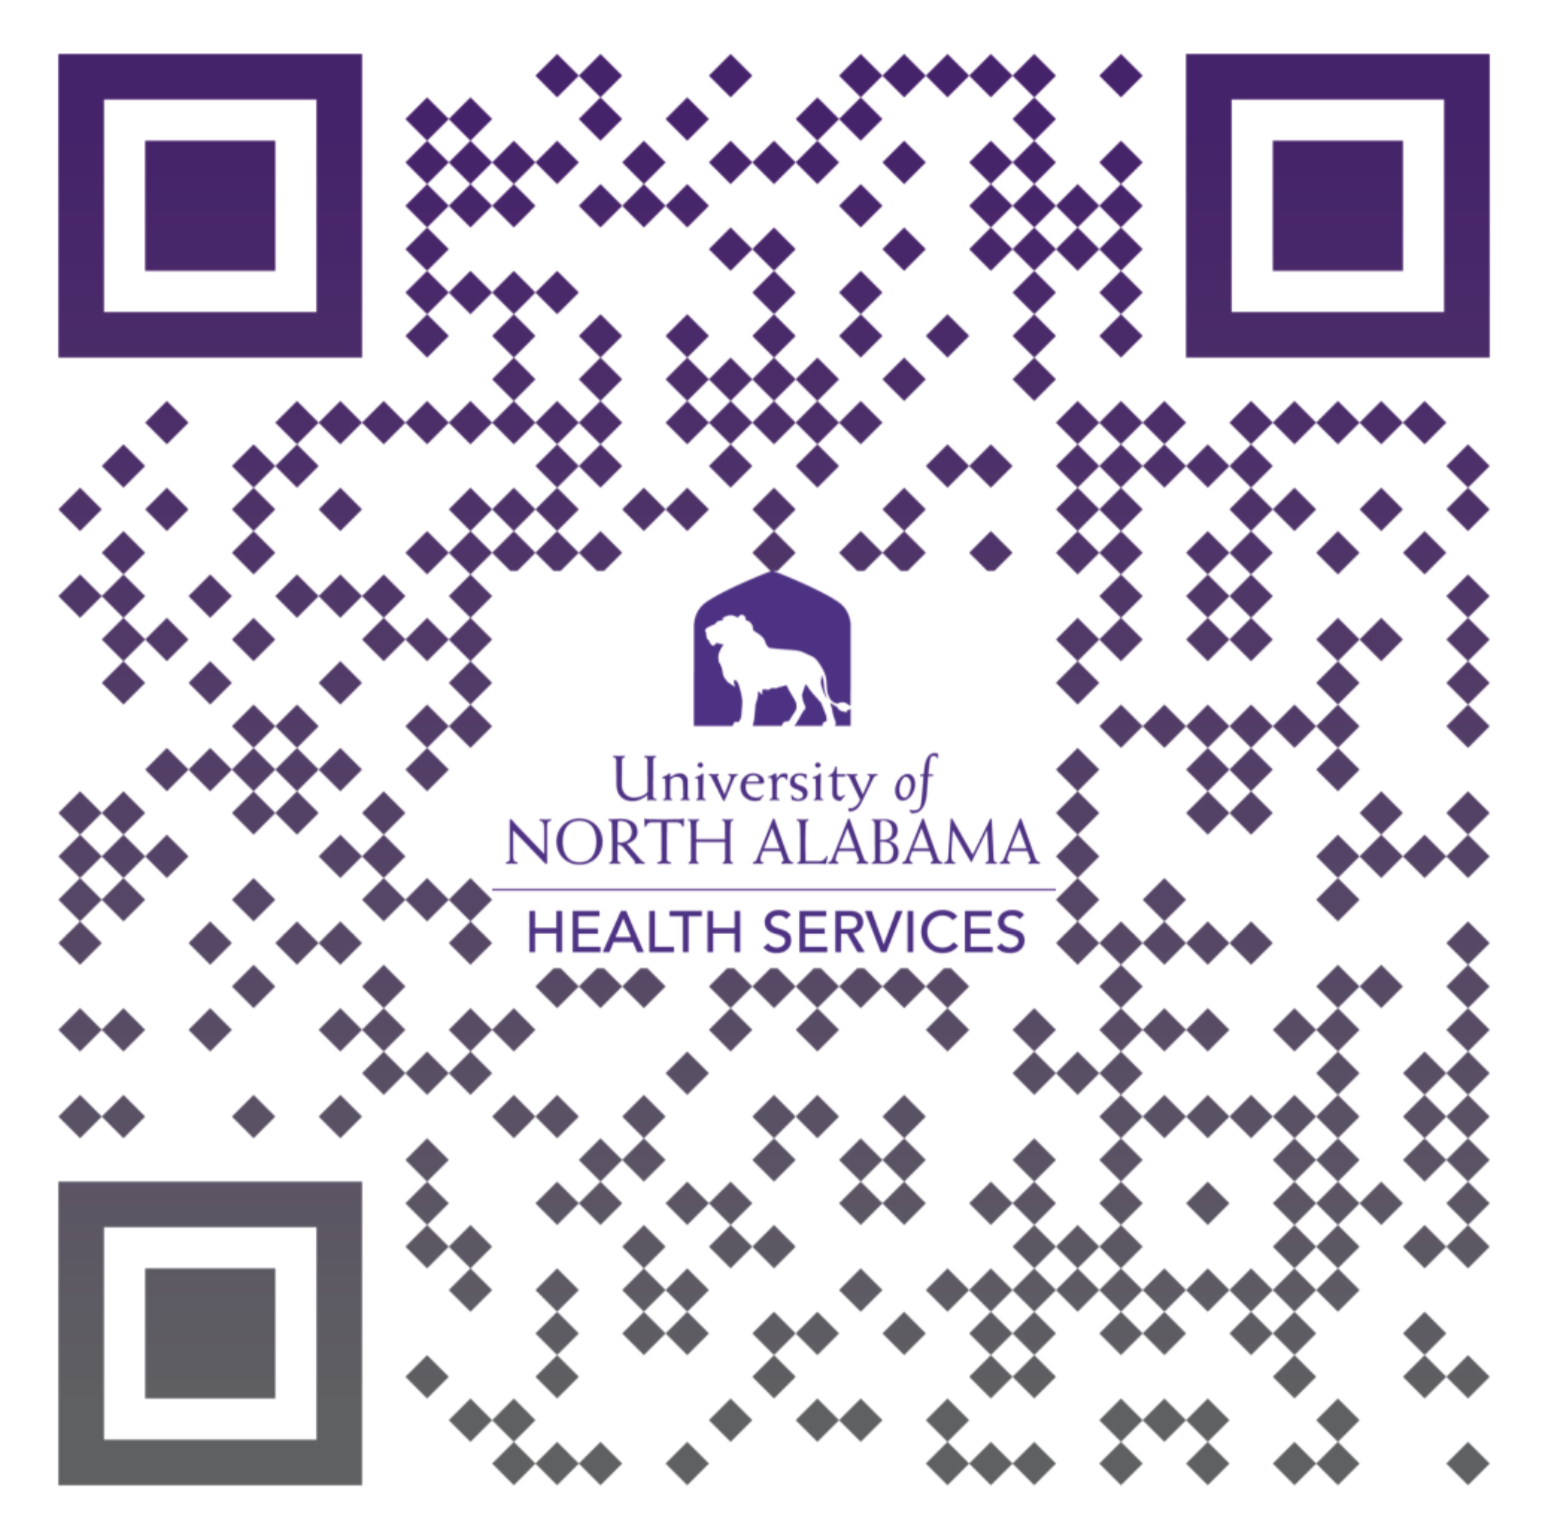 qr-health-services.png